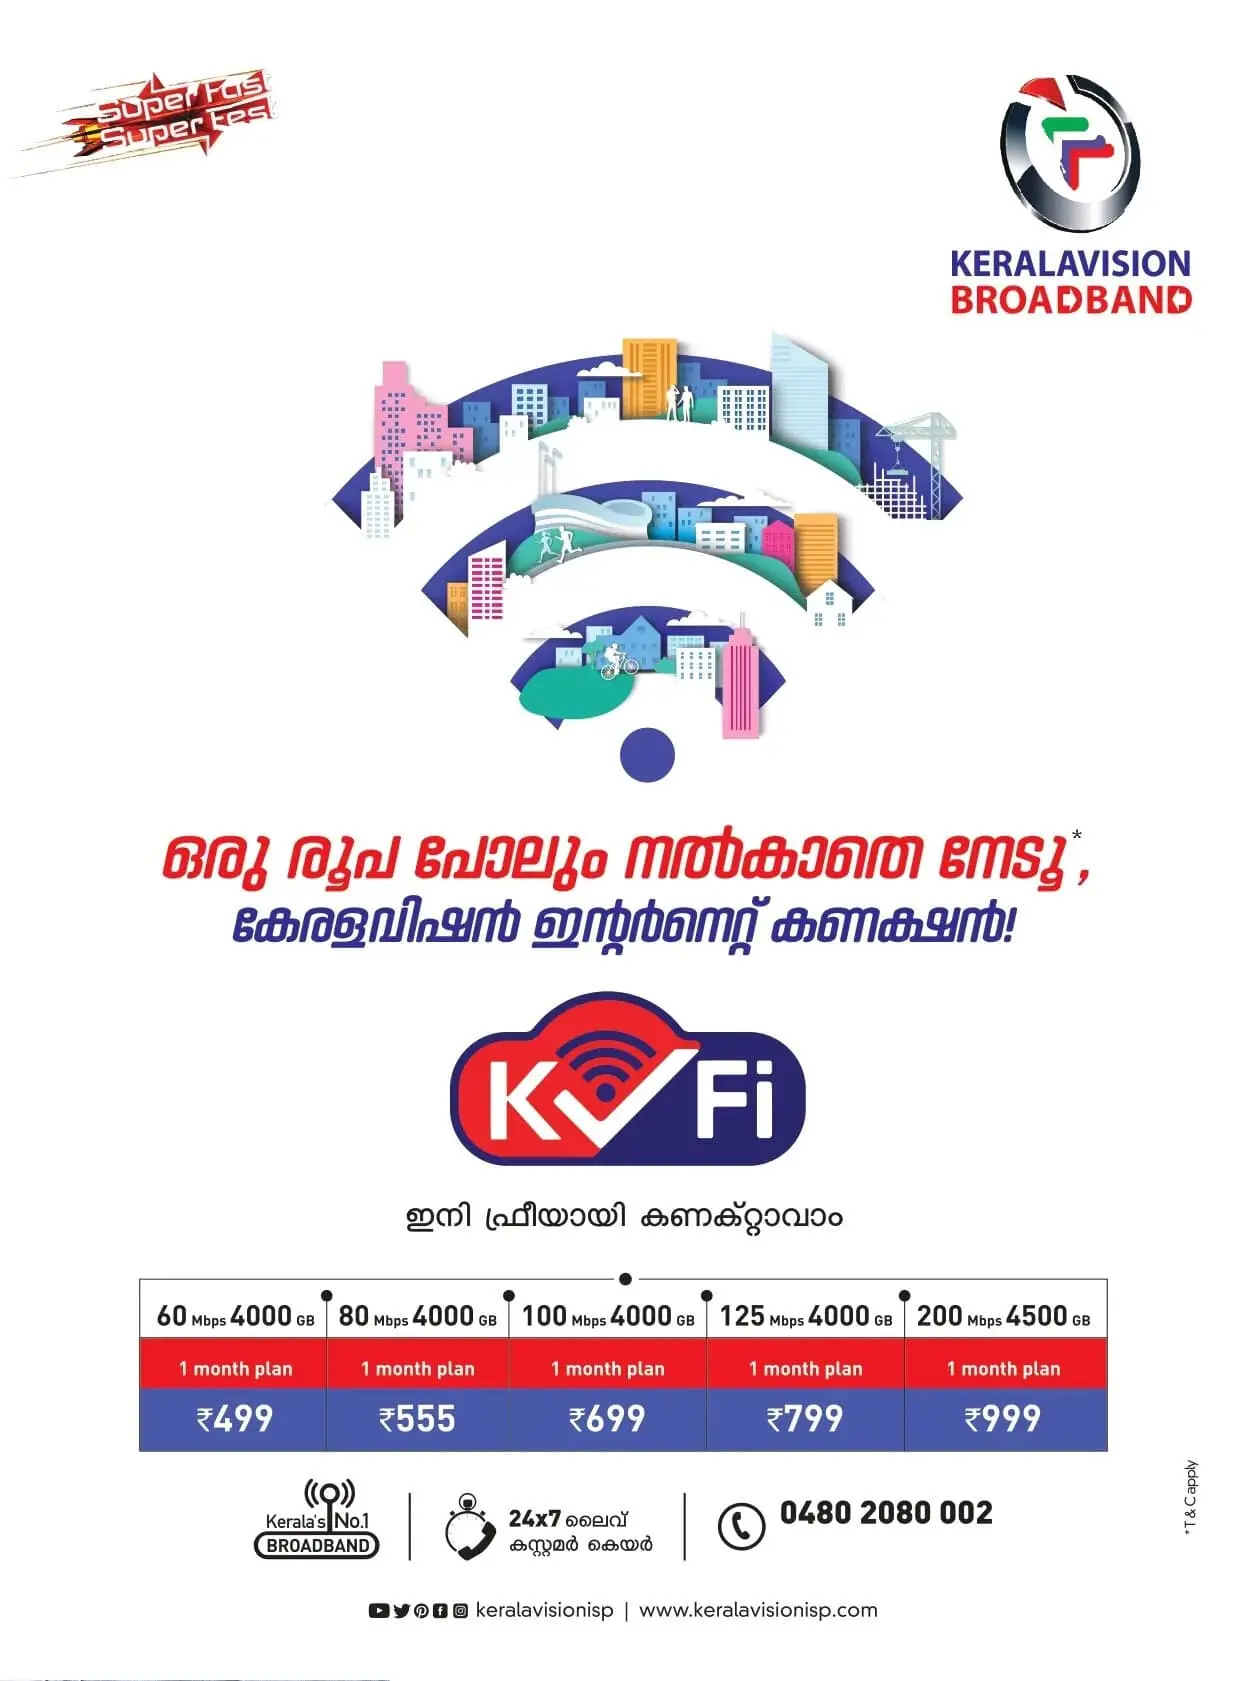 Make Kerala Vision Broadband Bill Payment on Bajaj Finserv